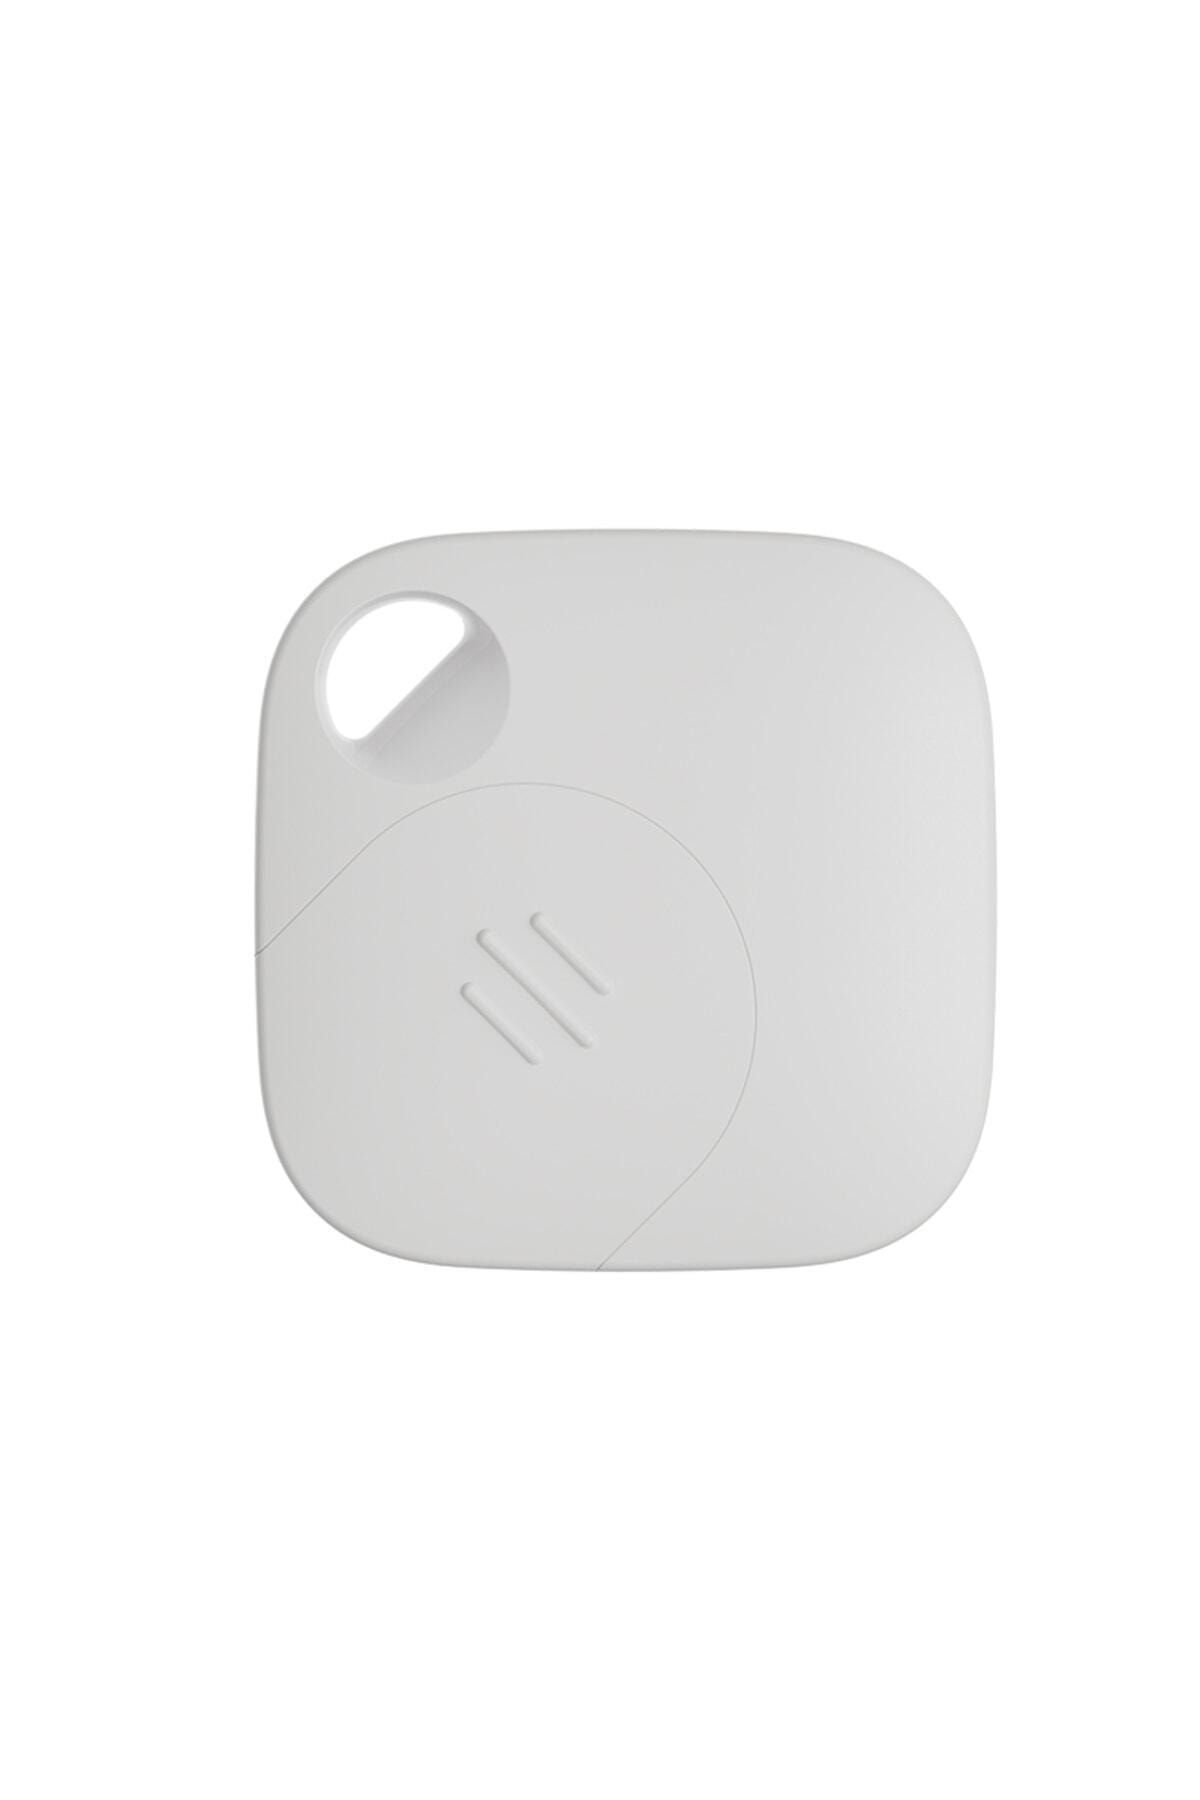 TUYA Smart Tag Apple Lisanslı Gps Takip Cihazı - (ANDROİD UYUMLU DEĞİLDİR)